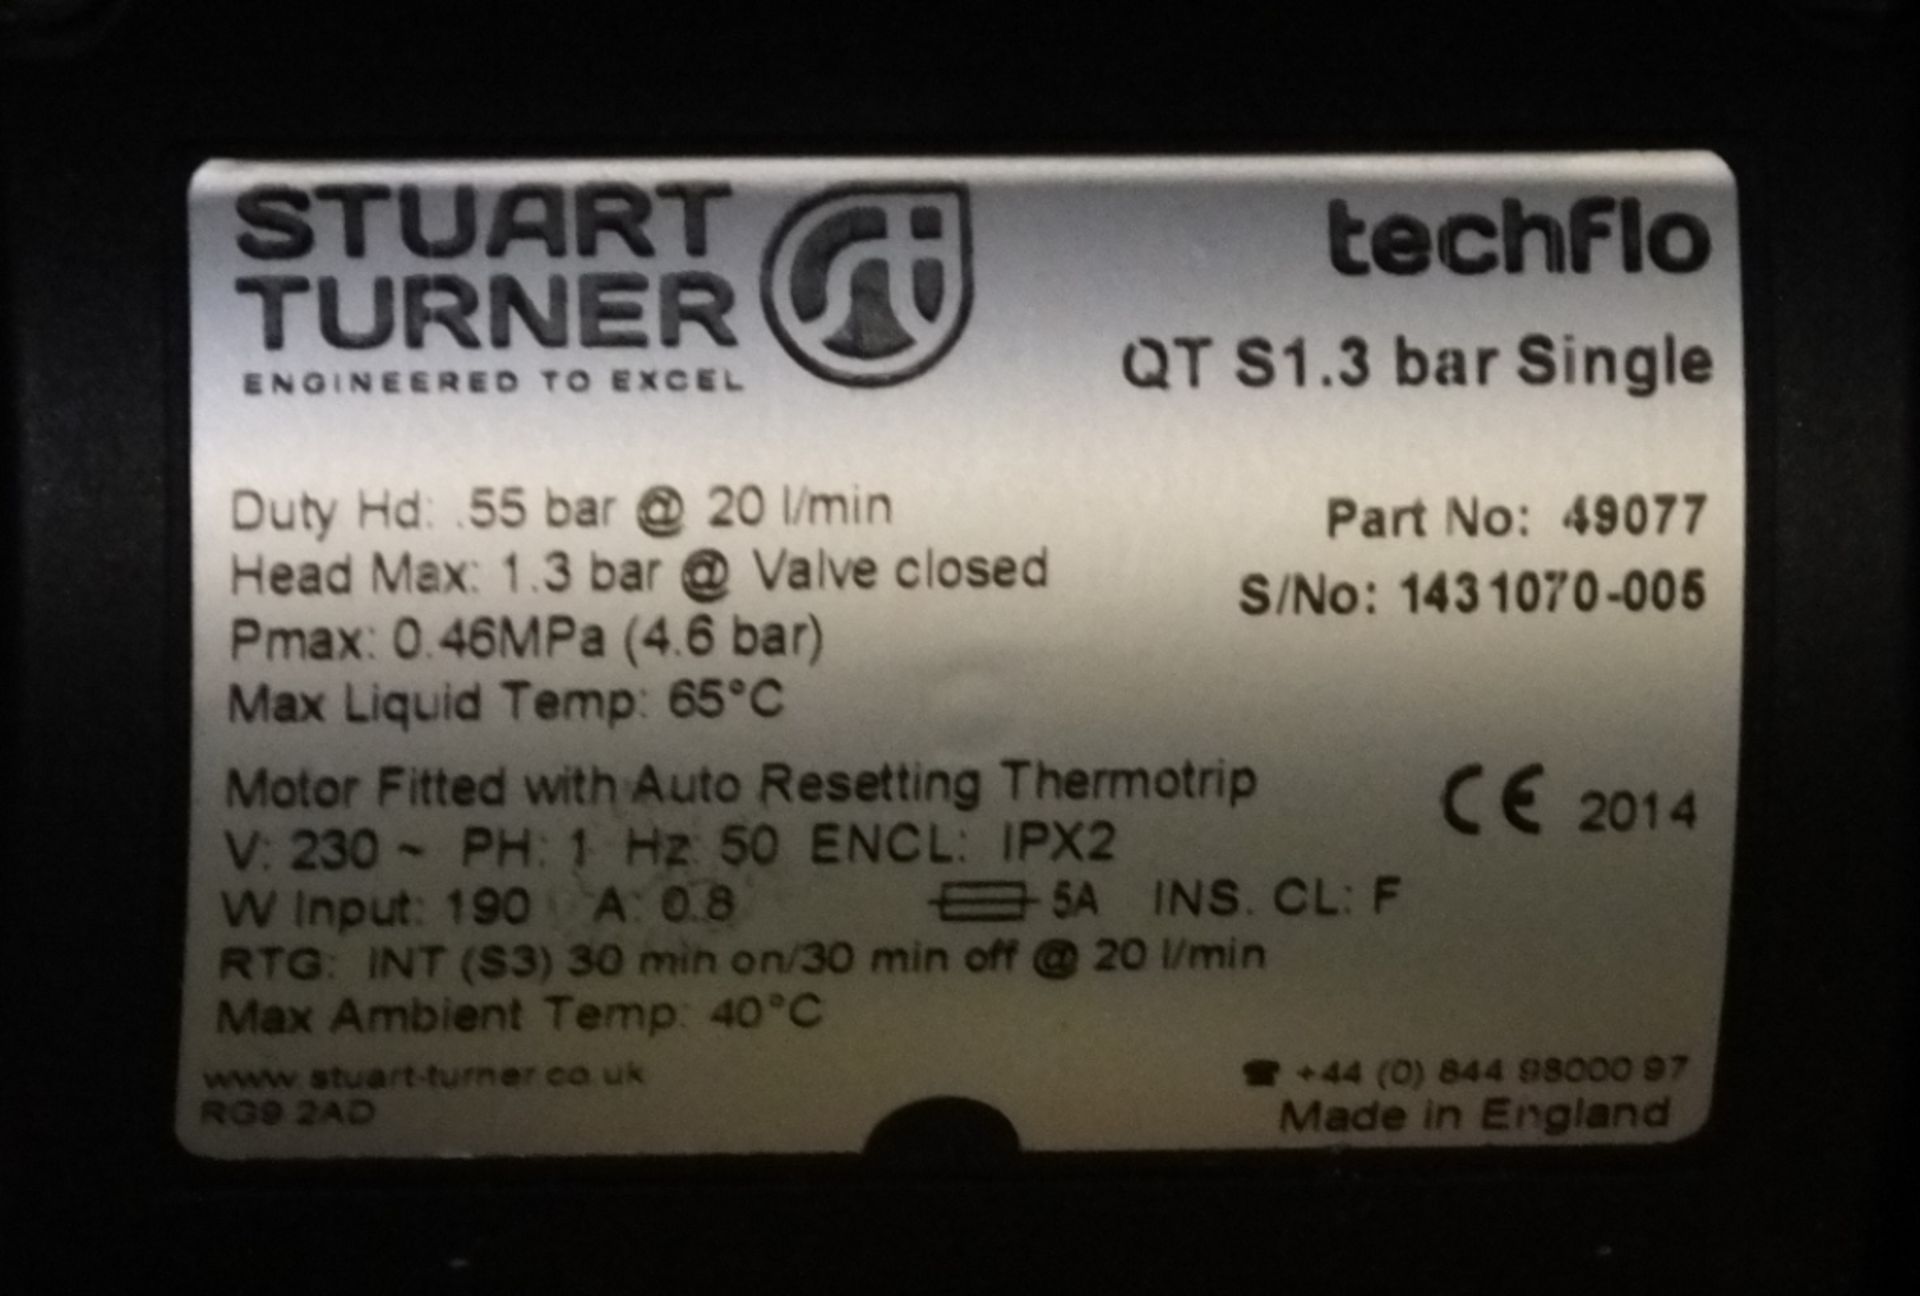 Stuart Turner Shower Pump - Techflo QT S1.3 bar Single - Image 2 of 2